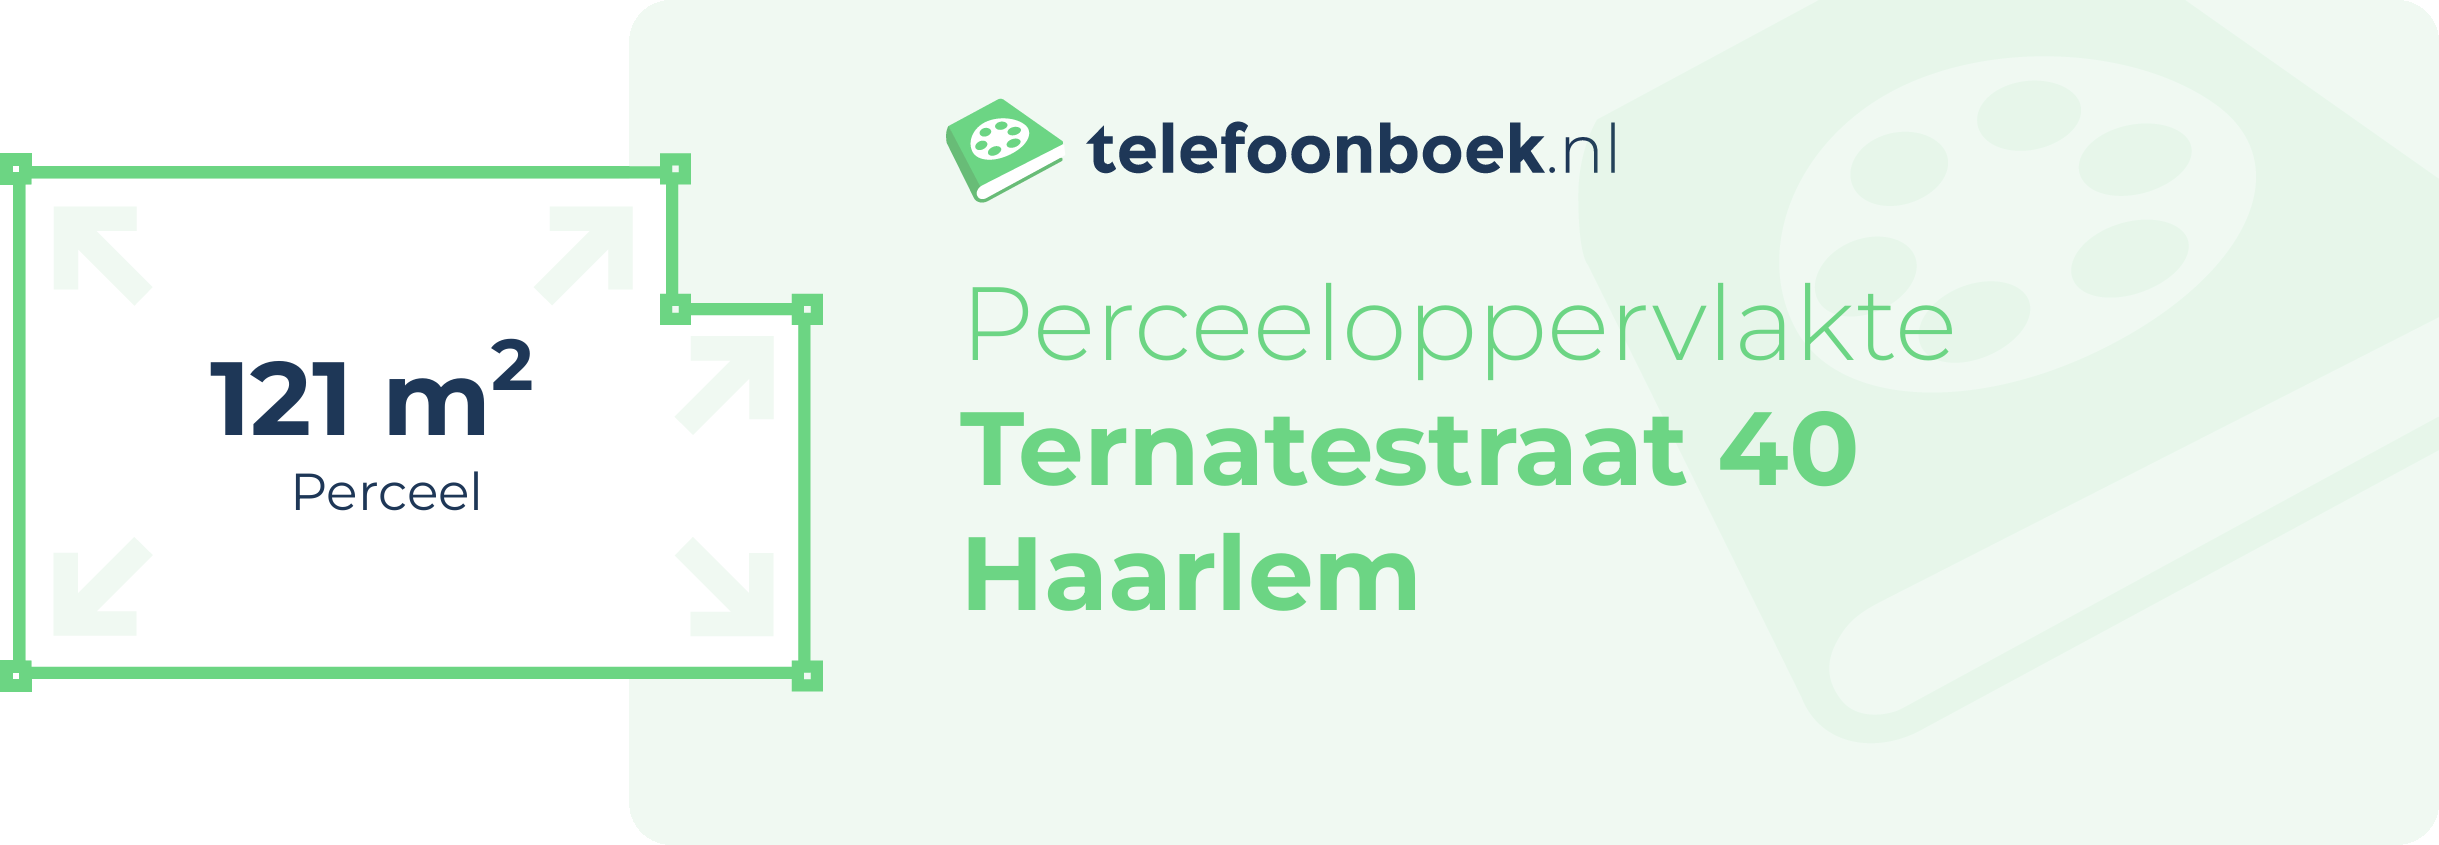 Perceeloppervlakte Ternatestraat 40 Haarlem